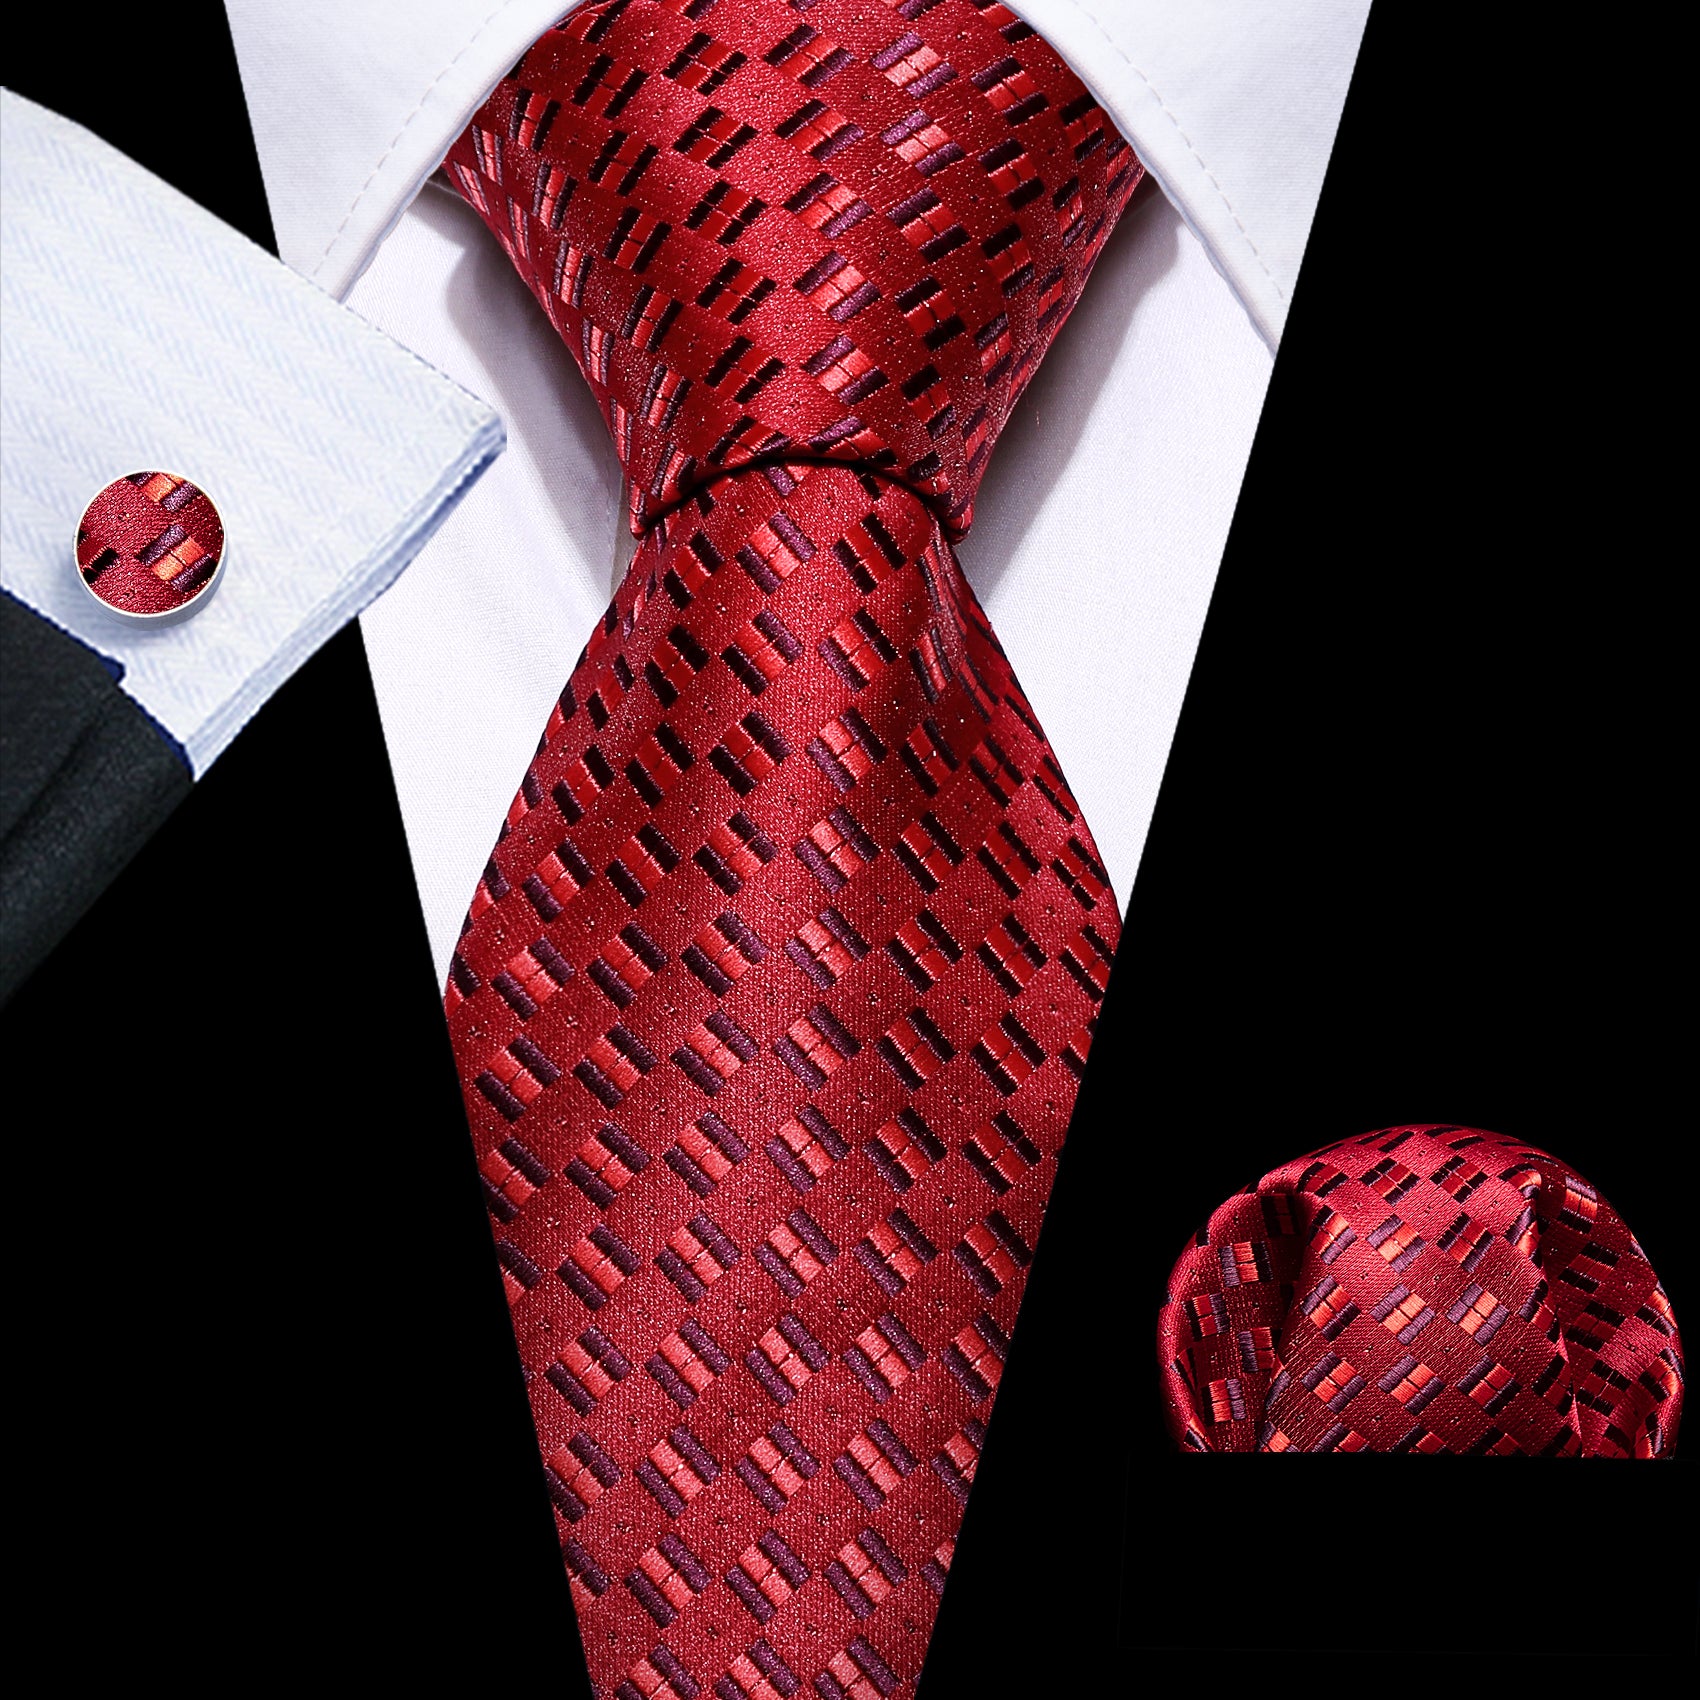 Novetly Red 59 Inches Silk Tie Hanky Cufflinks Set